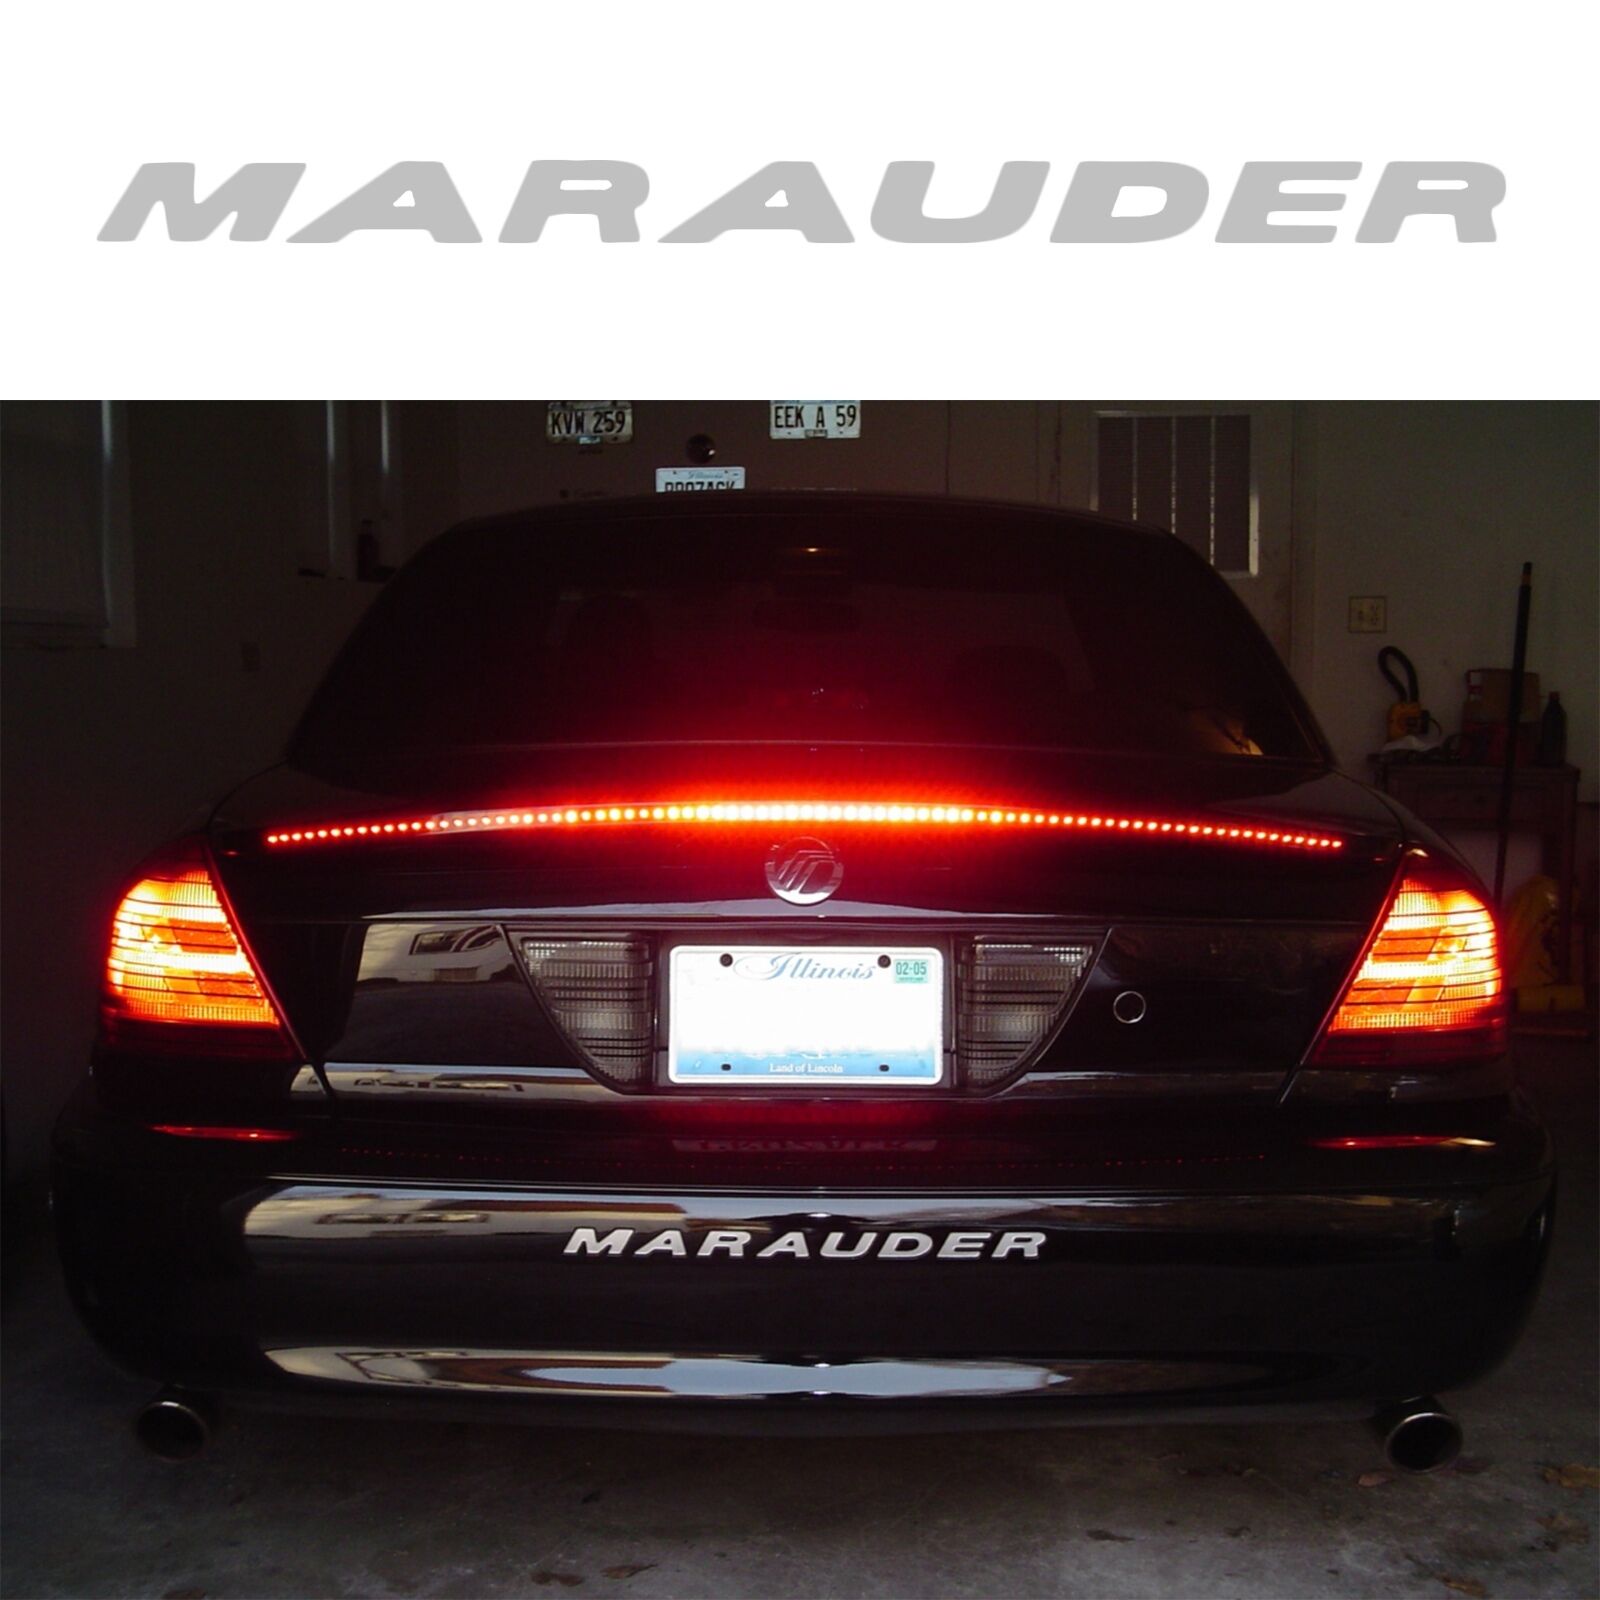 Mirror Chrome Rear Bumper Inserts For 2003-2004 Mercury Marauder New 